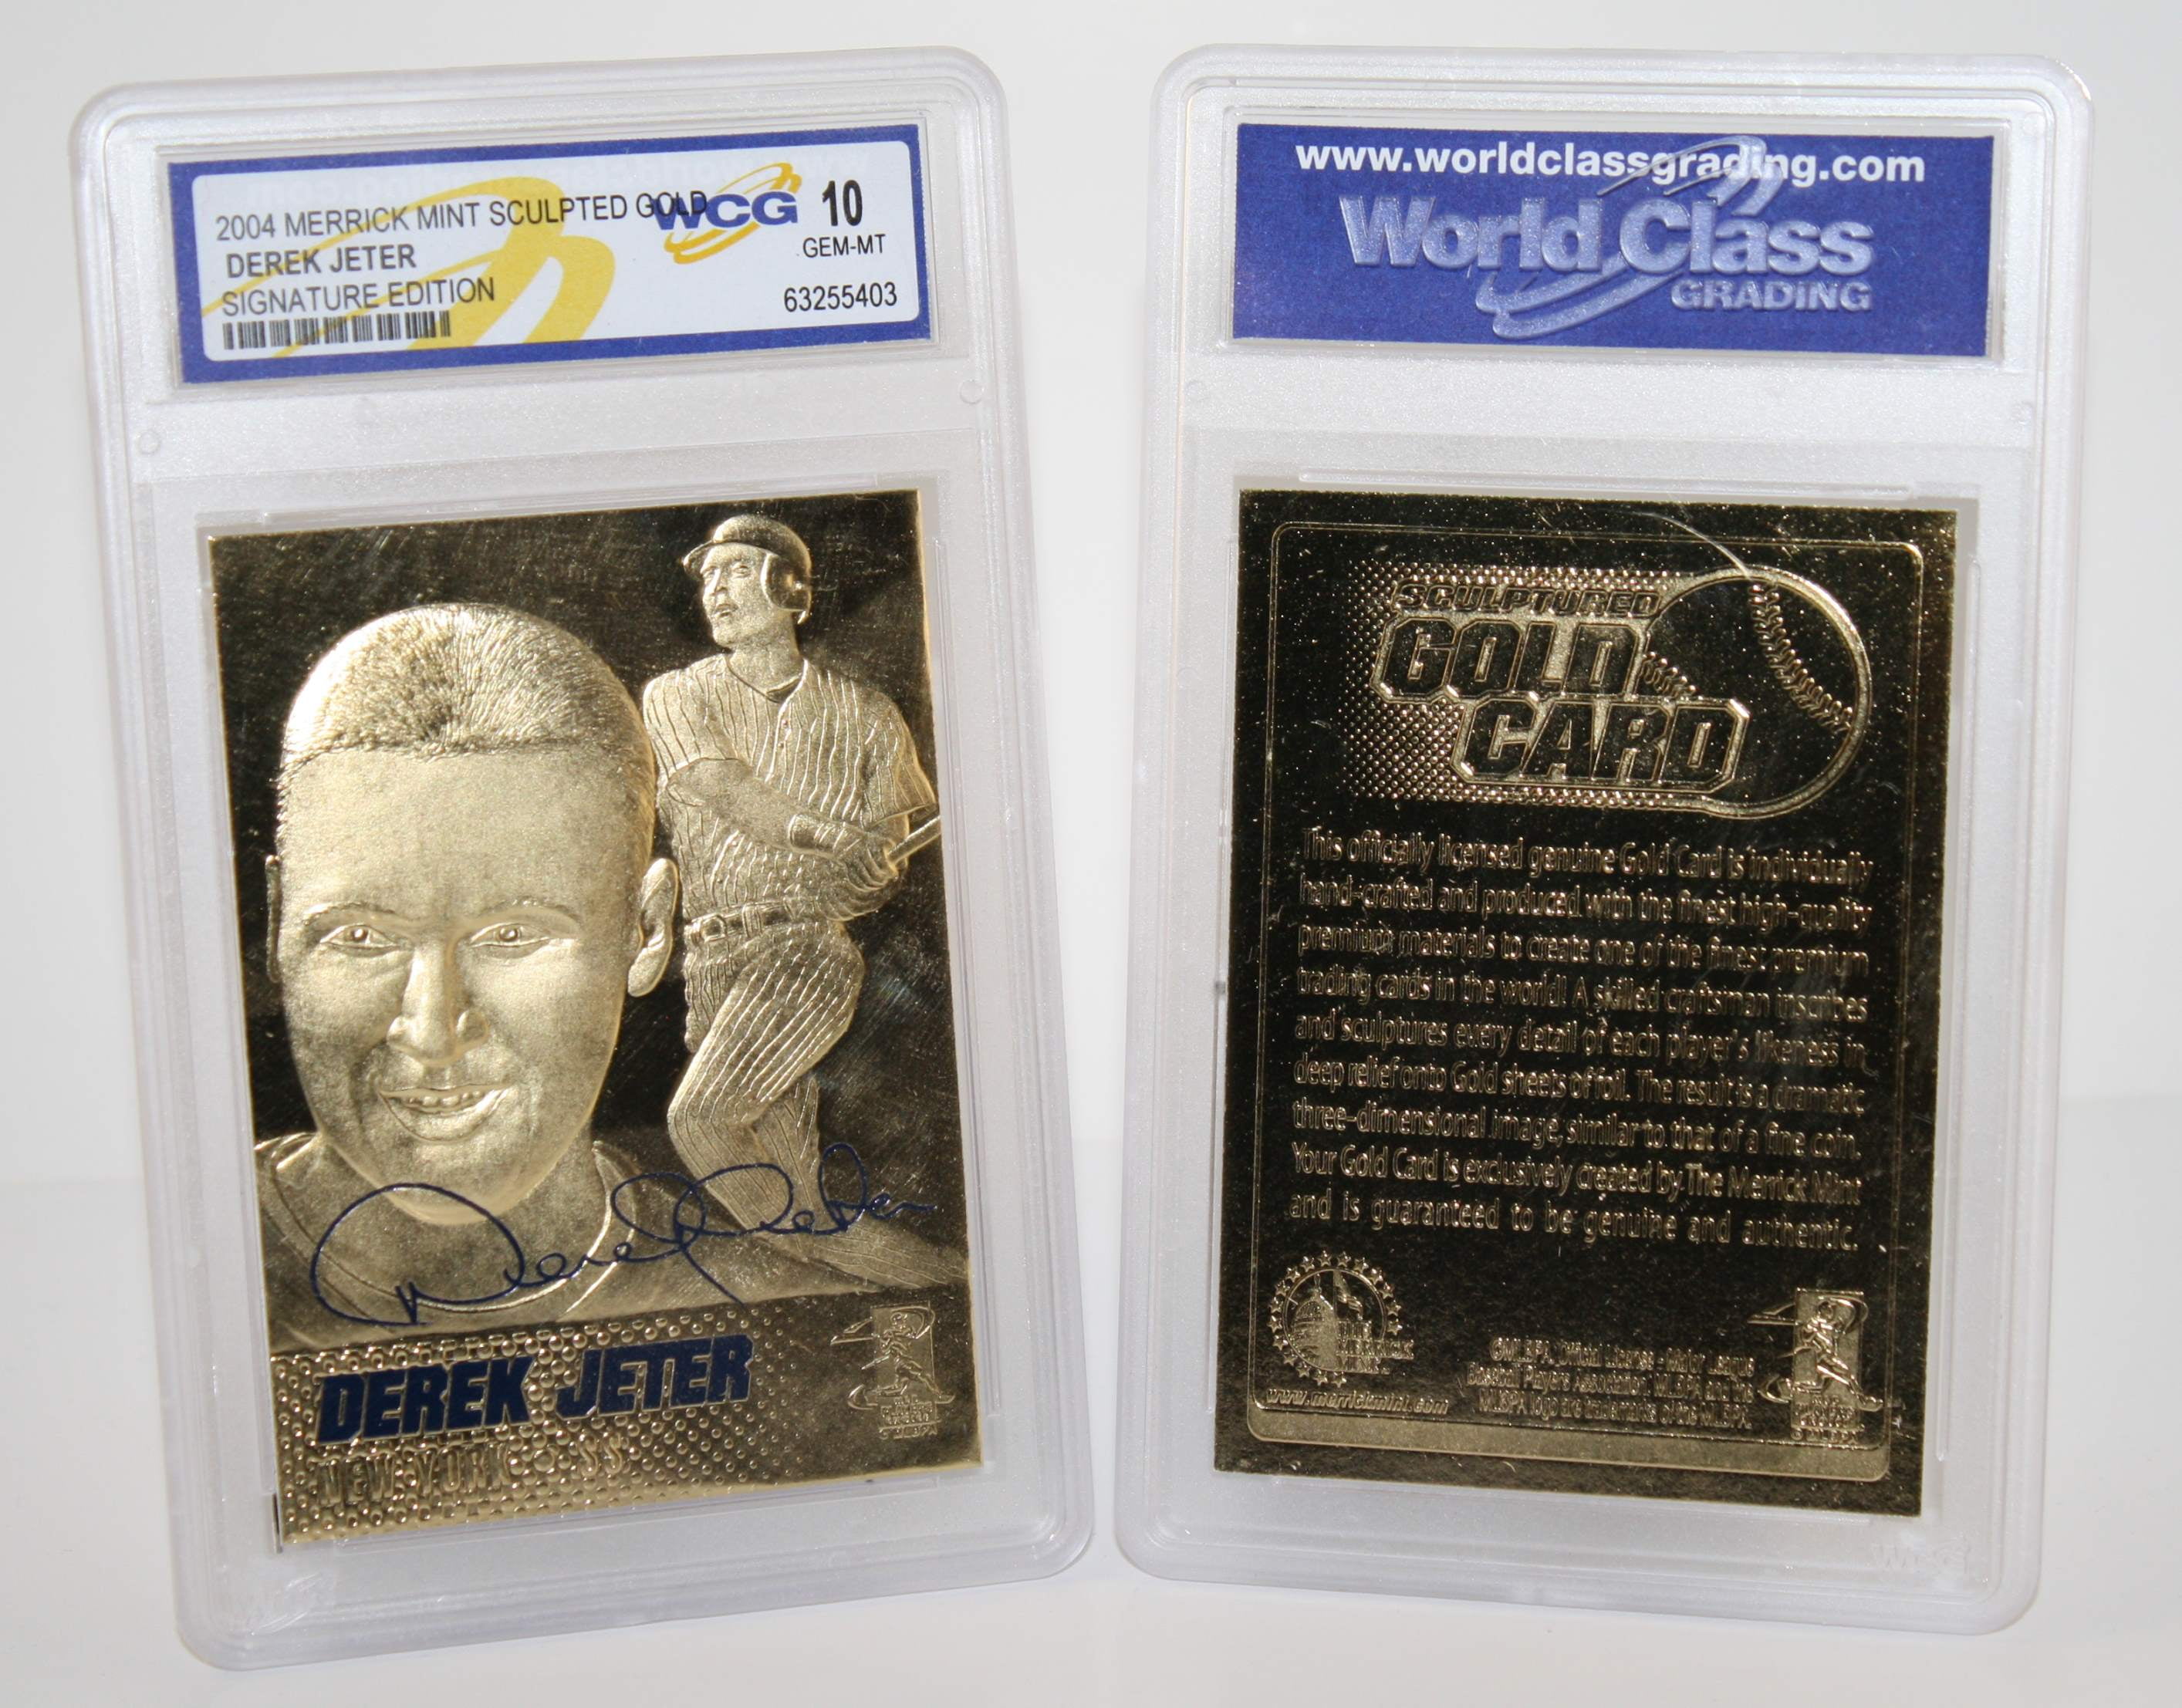 1996 Baseball Yankees MICKEY MANTLE Bleachers Commerce 23K GOLD CARD Graded 10 